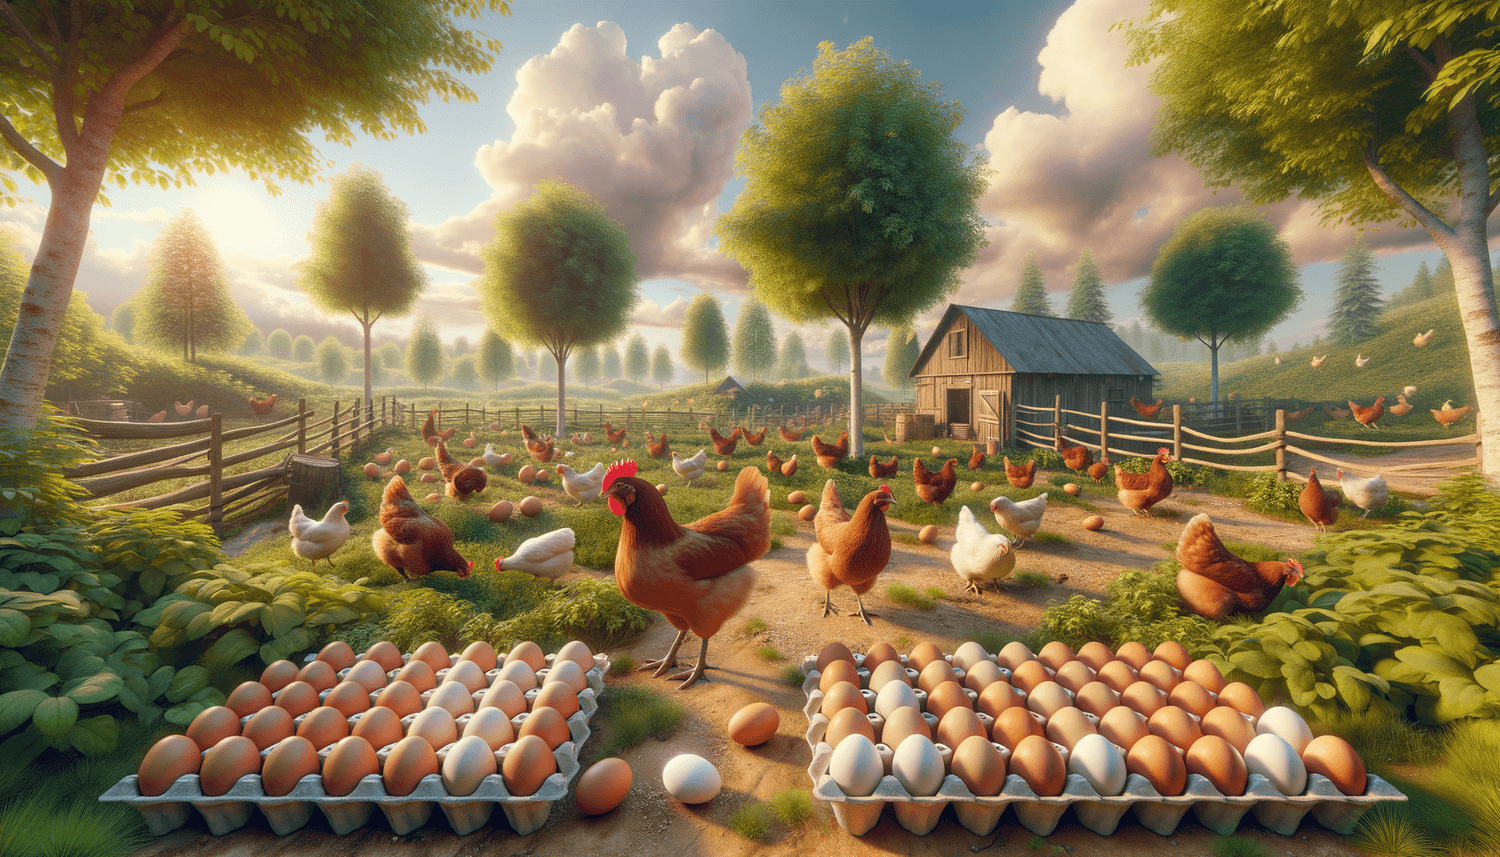 How Many Eggs Do Chickens Lay?